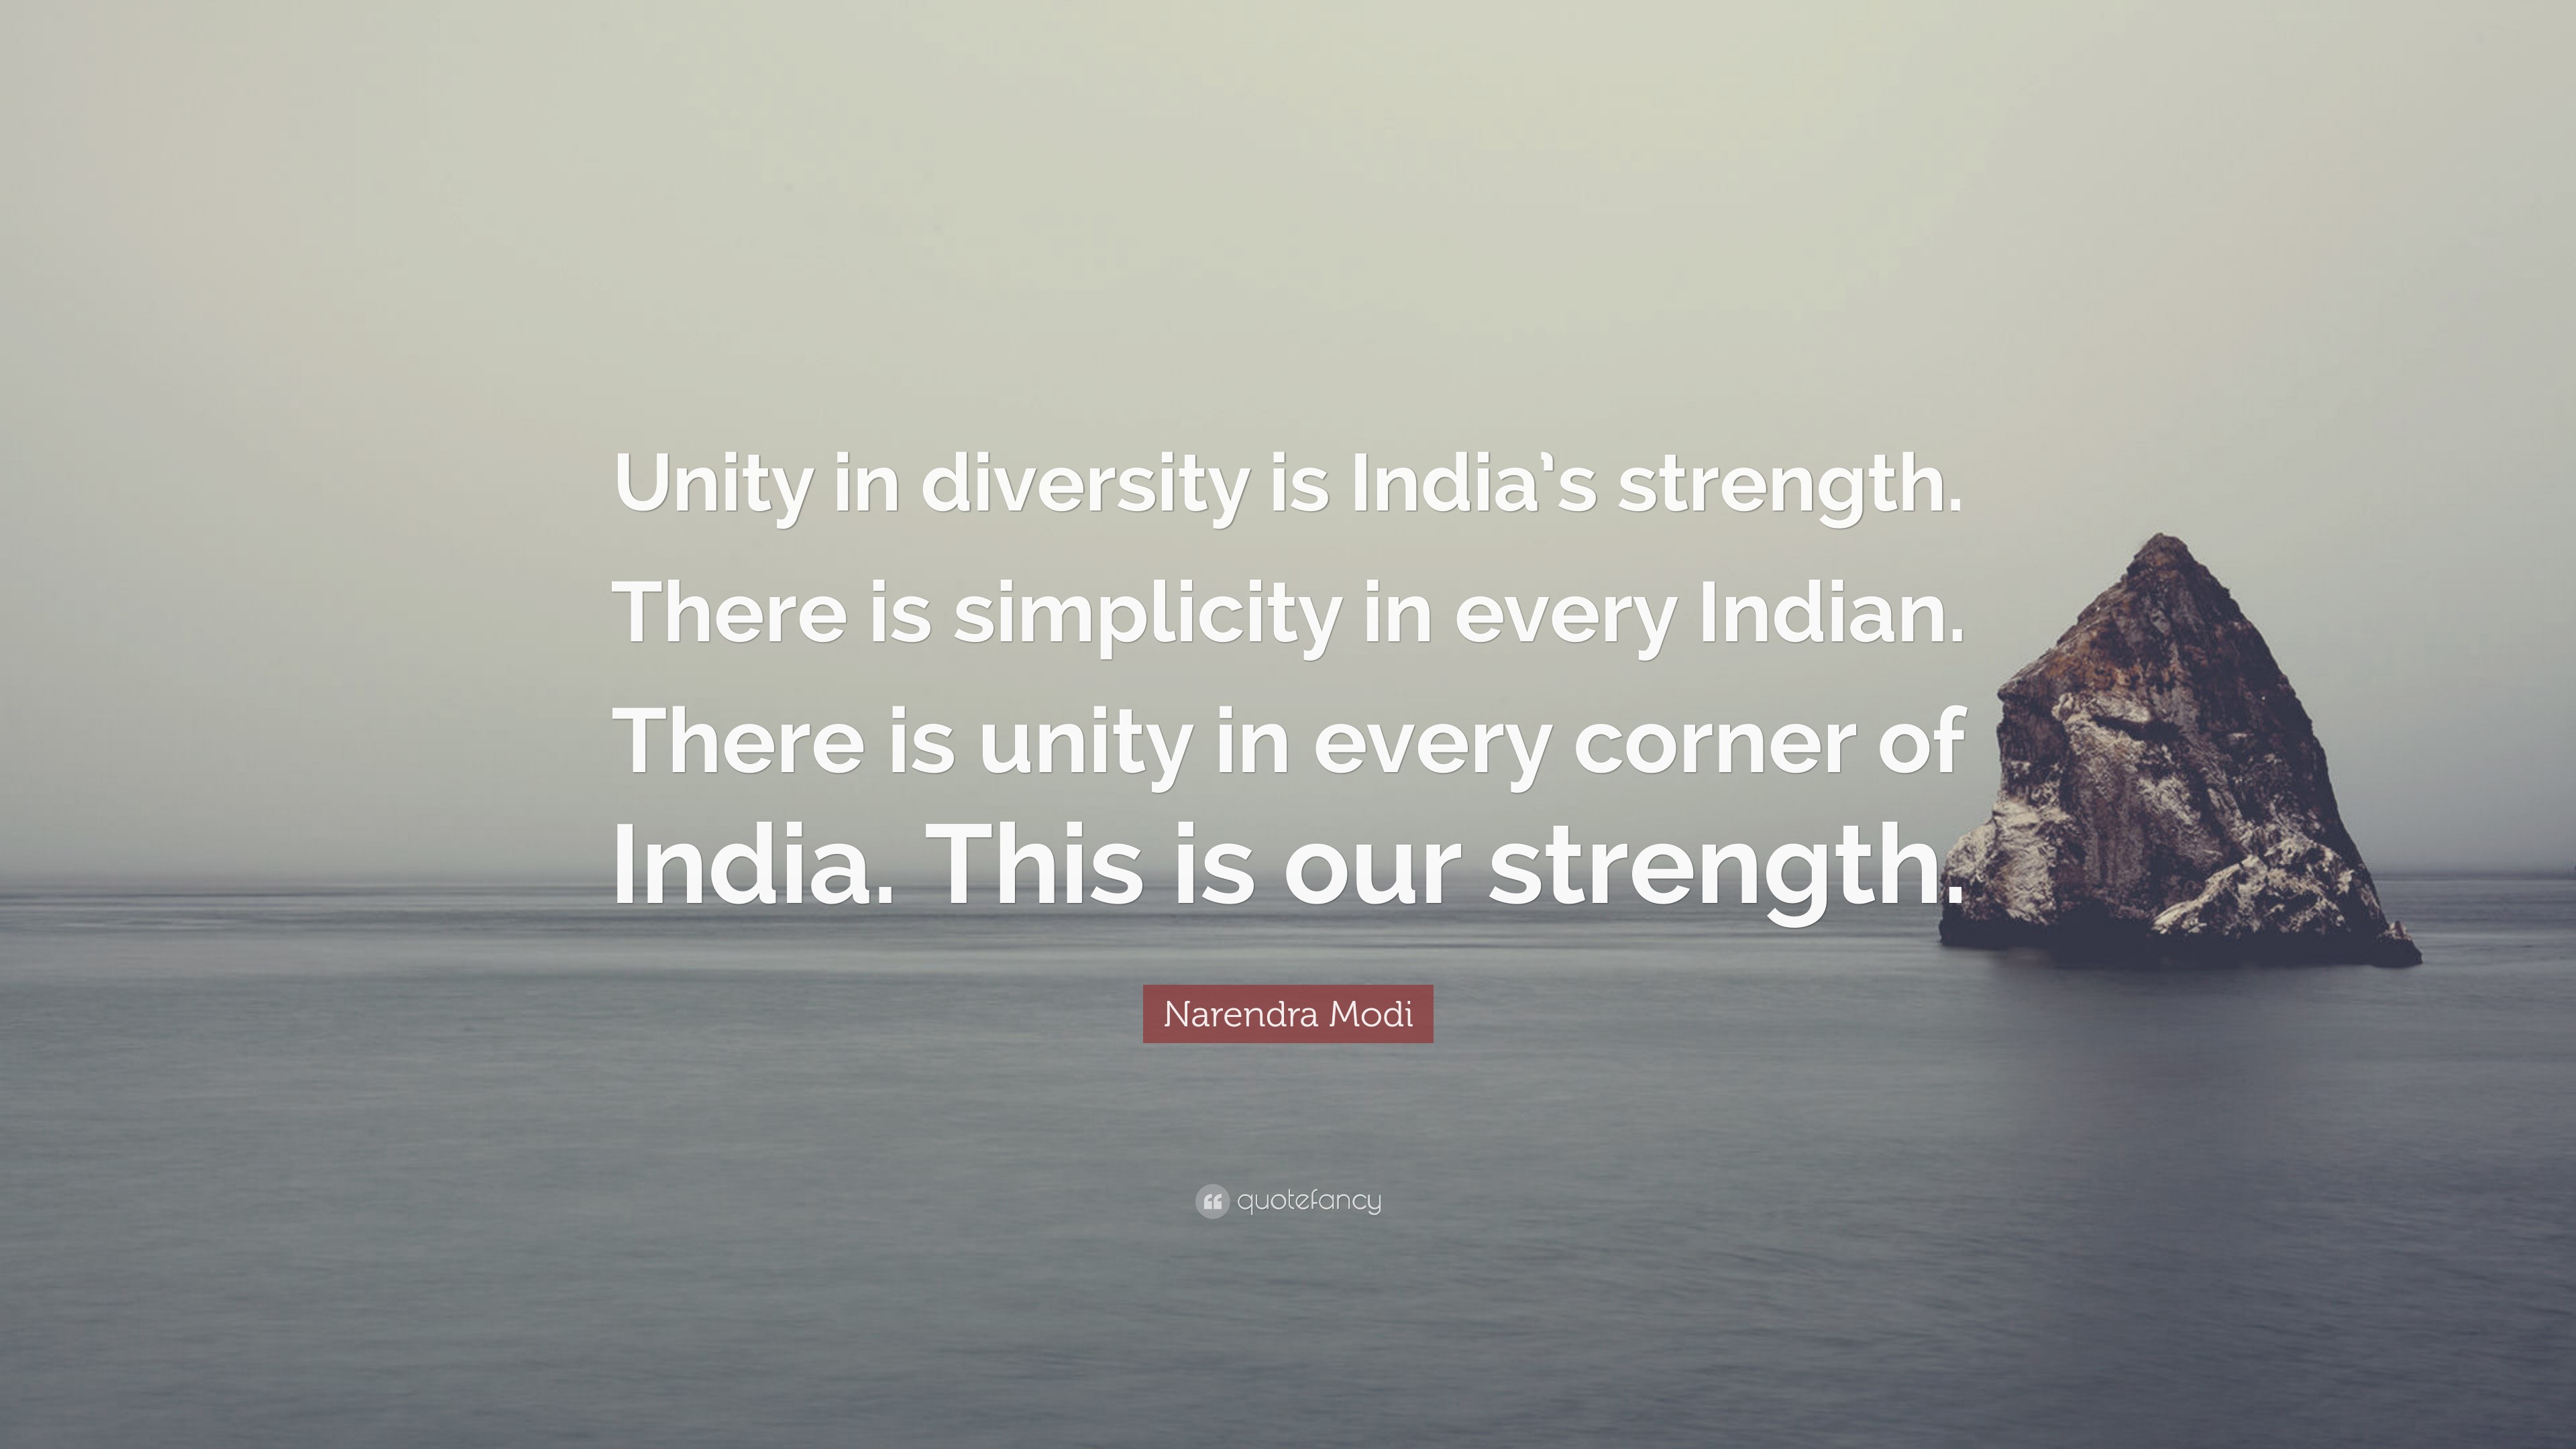 Narendra Modi Quote “Unity in diversity is India’s